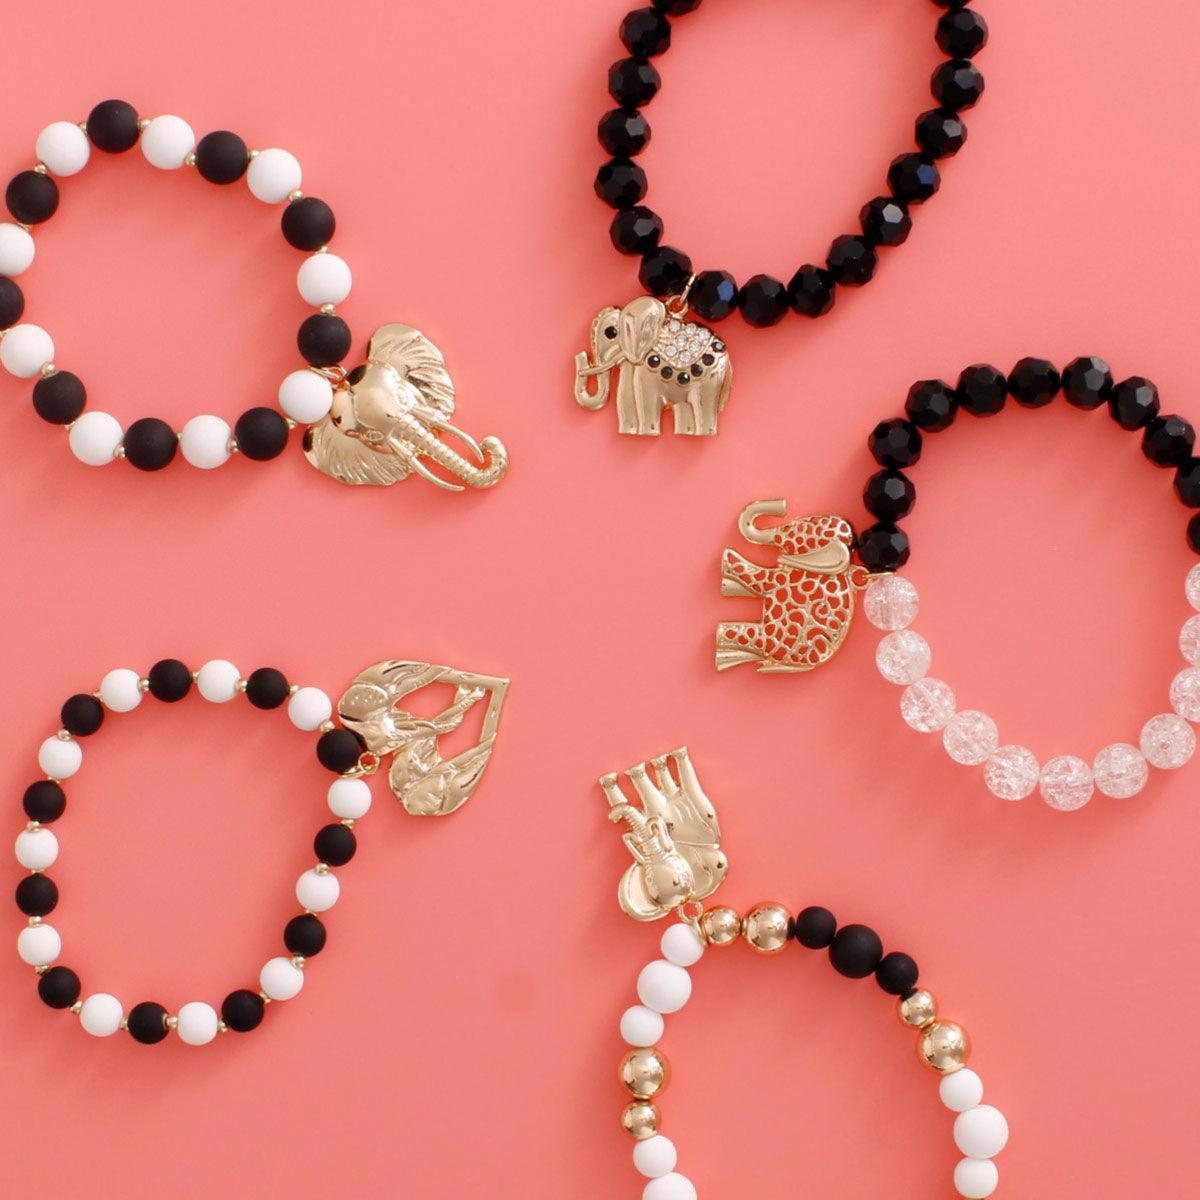 Stylish Monochromatic Beaded Bracelets with Charms - Shop Now!